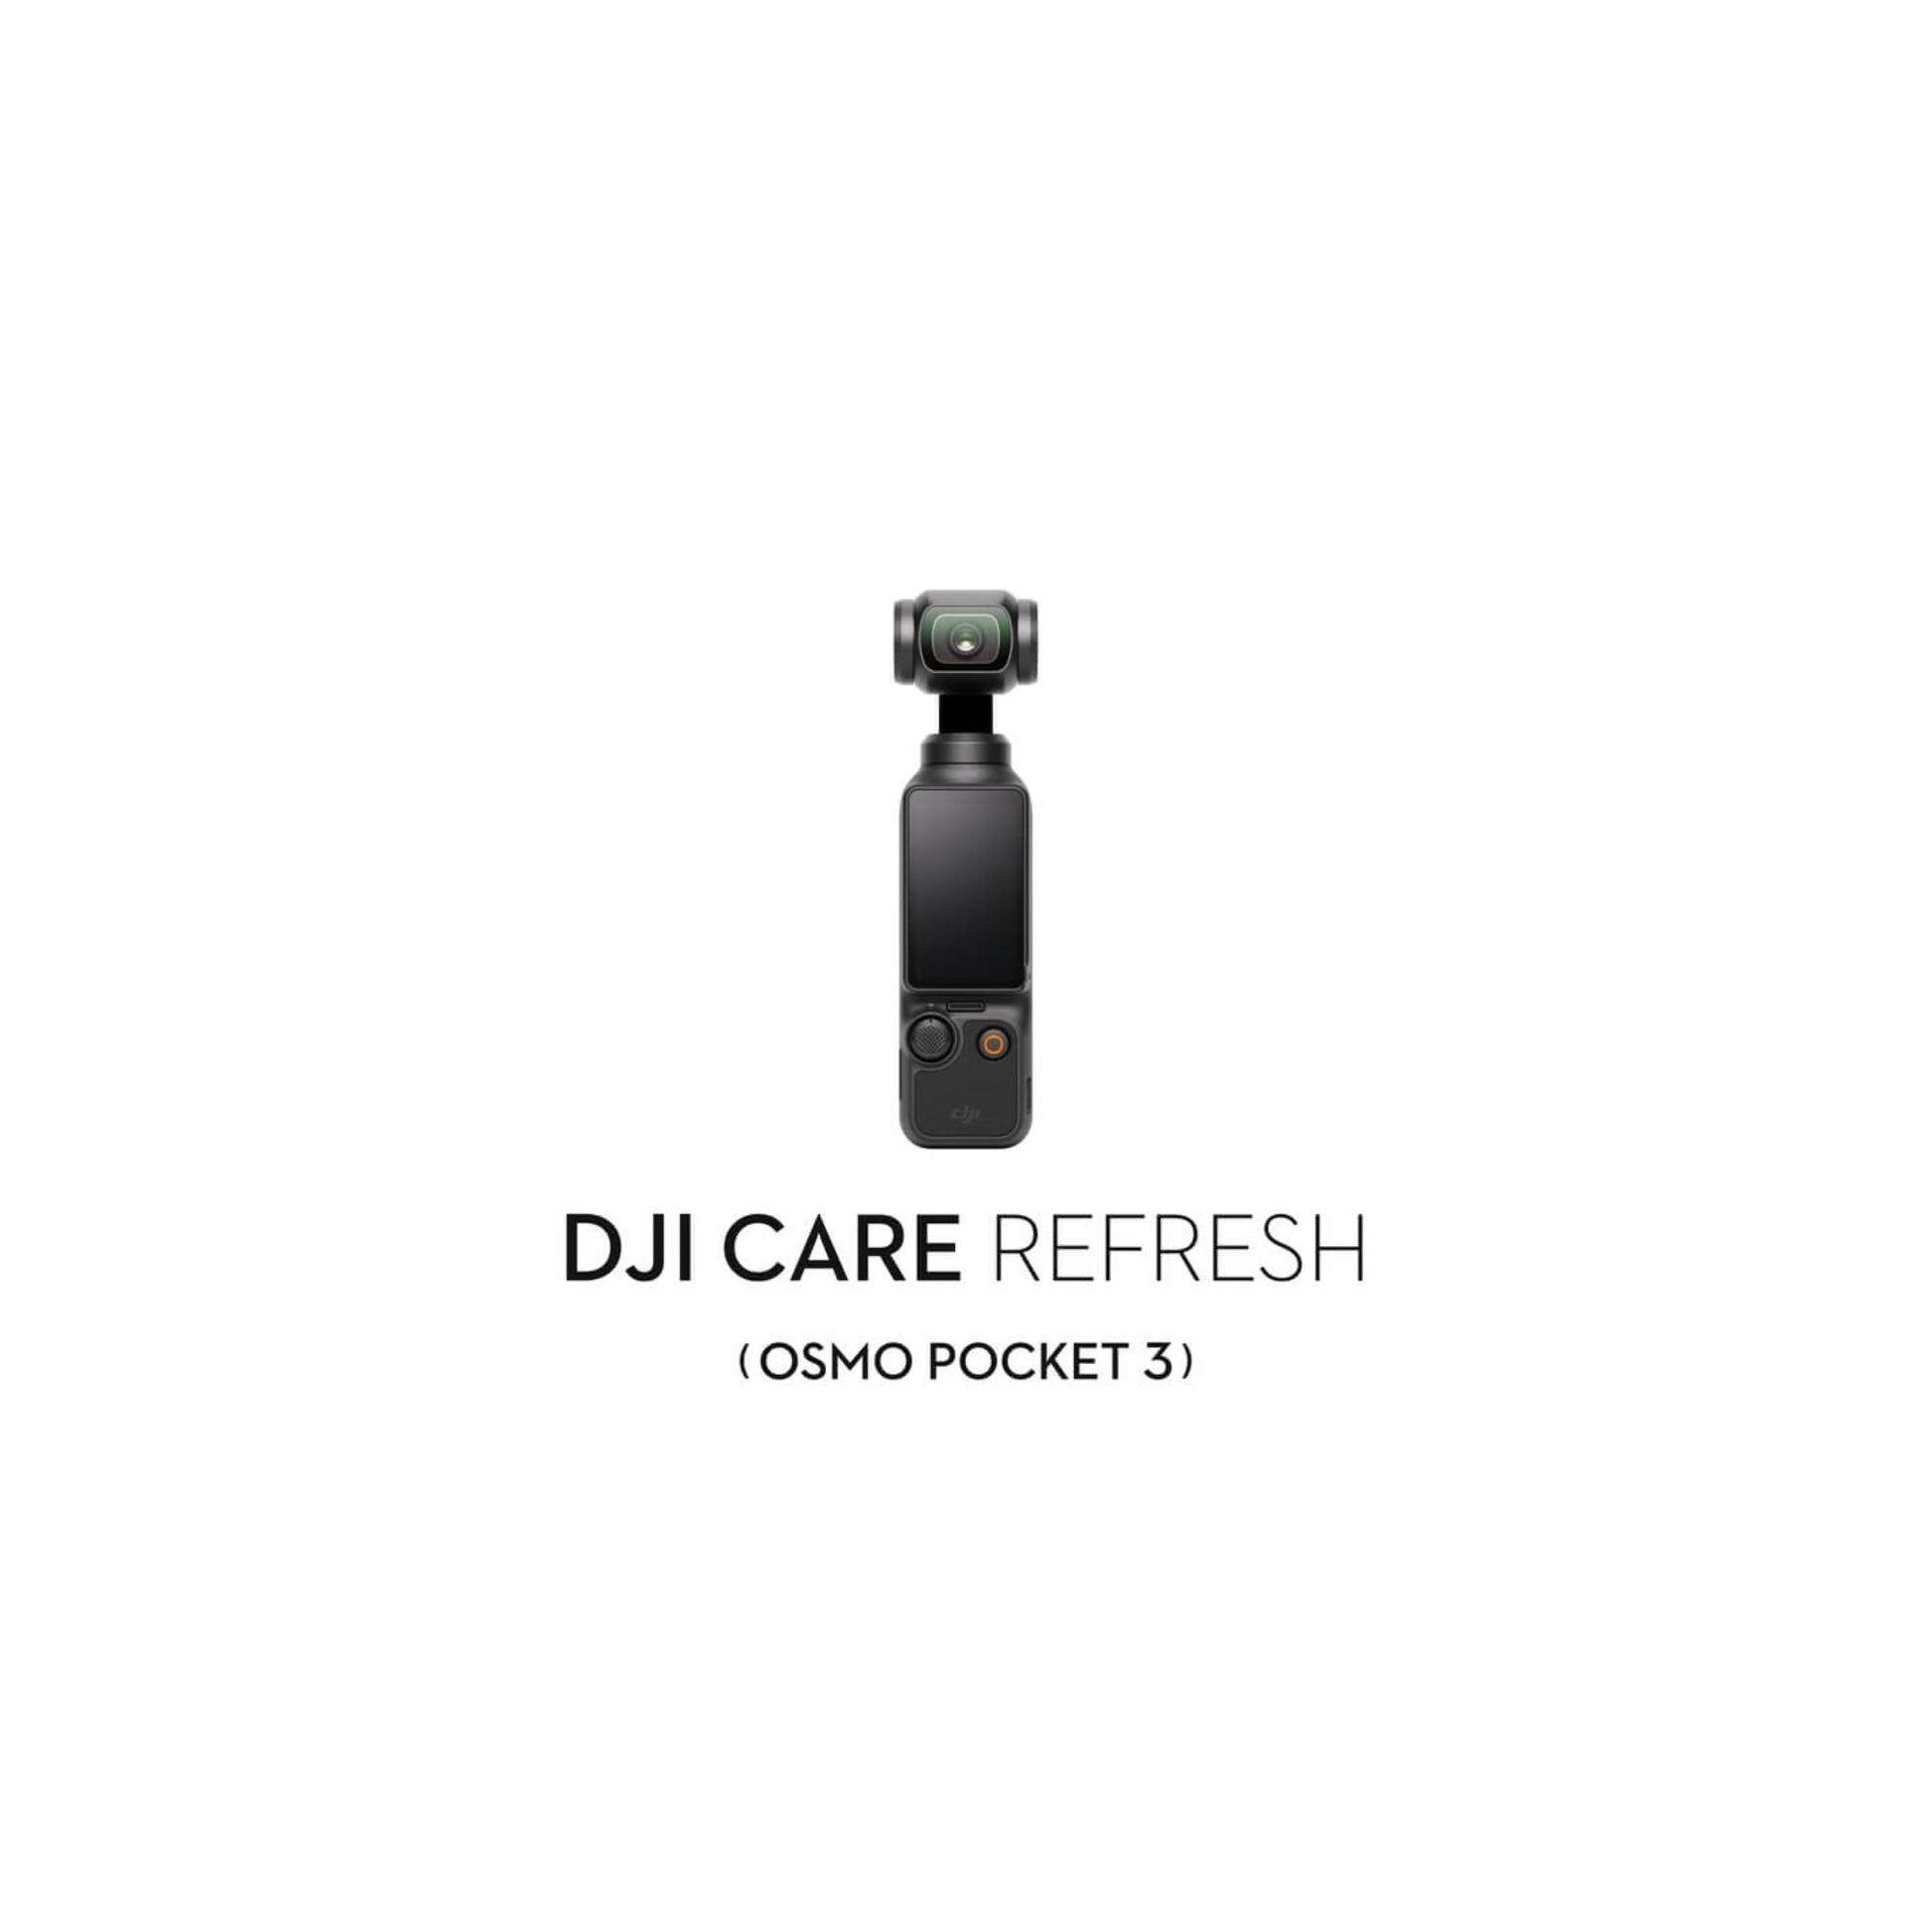 DJI Care Refresh 2-Year Plan (Osmo Pocket 3) - Silverlight Optics